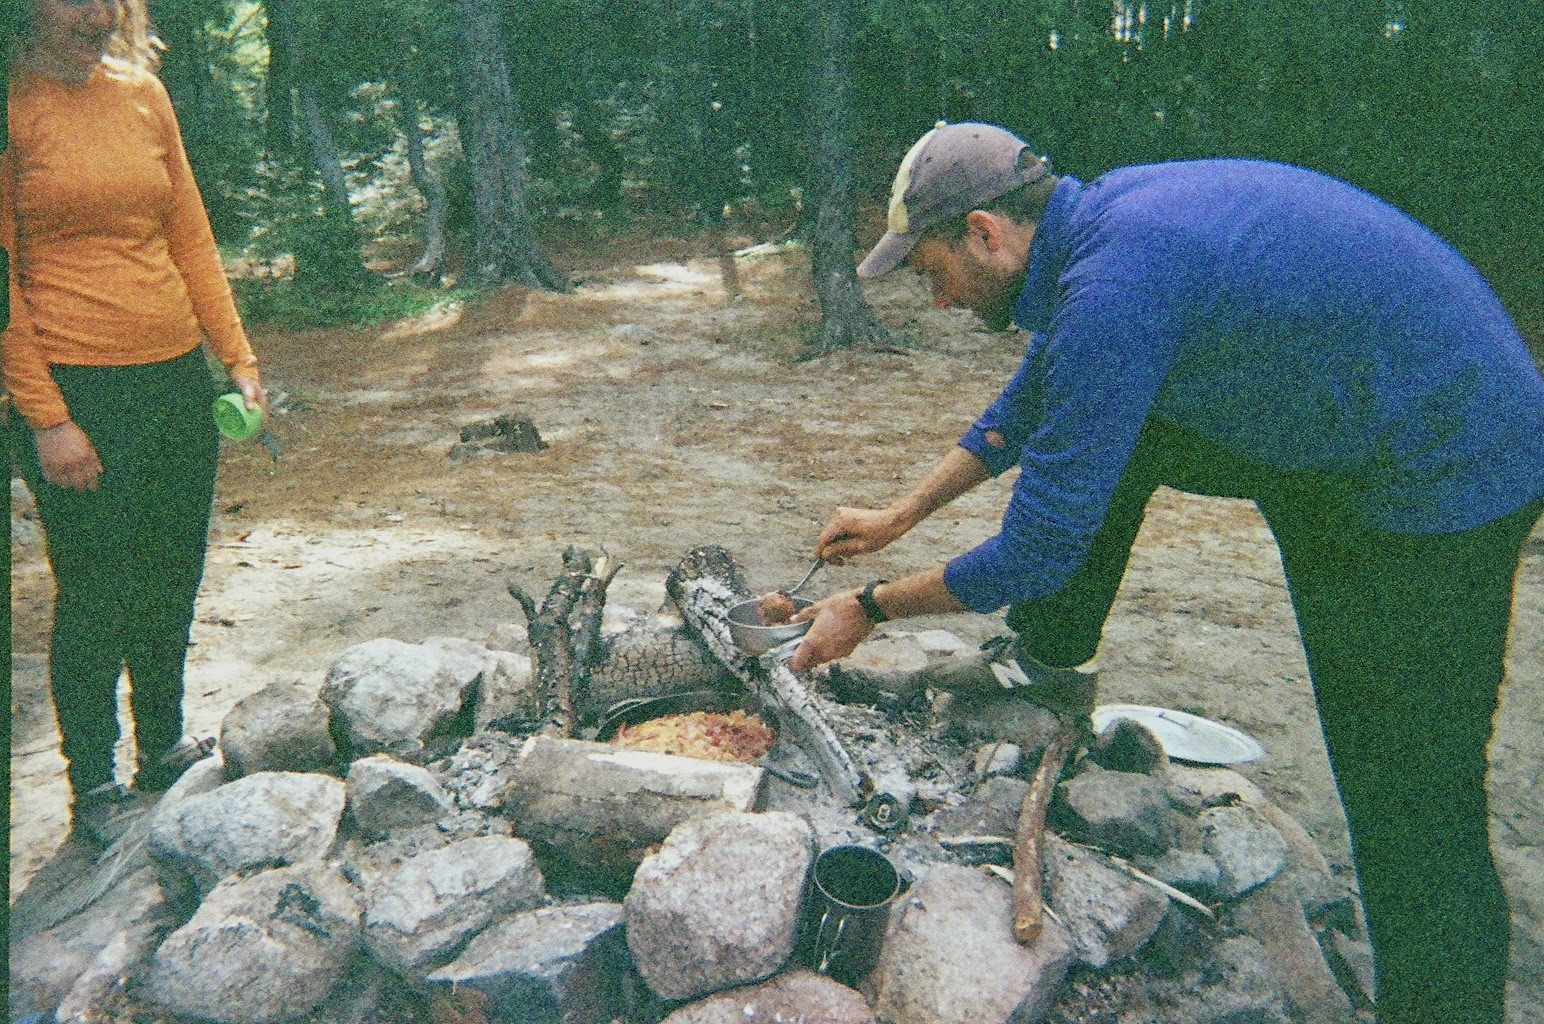 Dishing out Campfire Skillet Cobbler